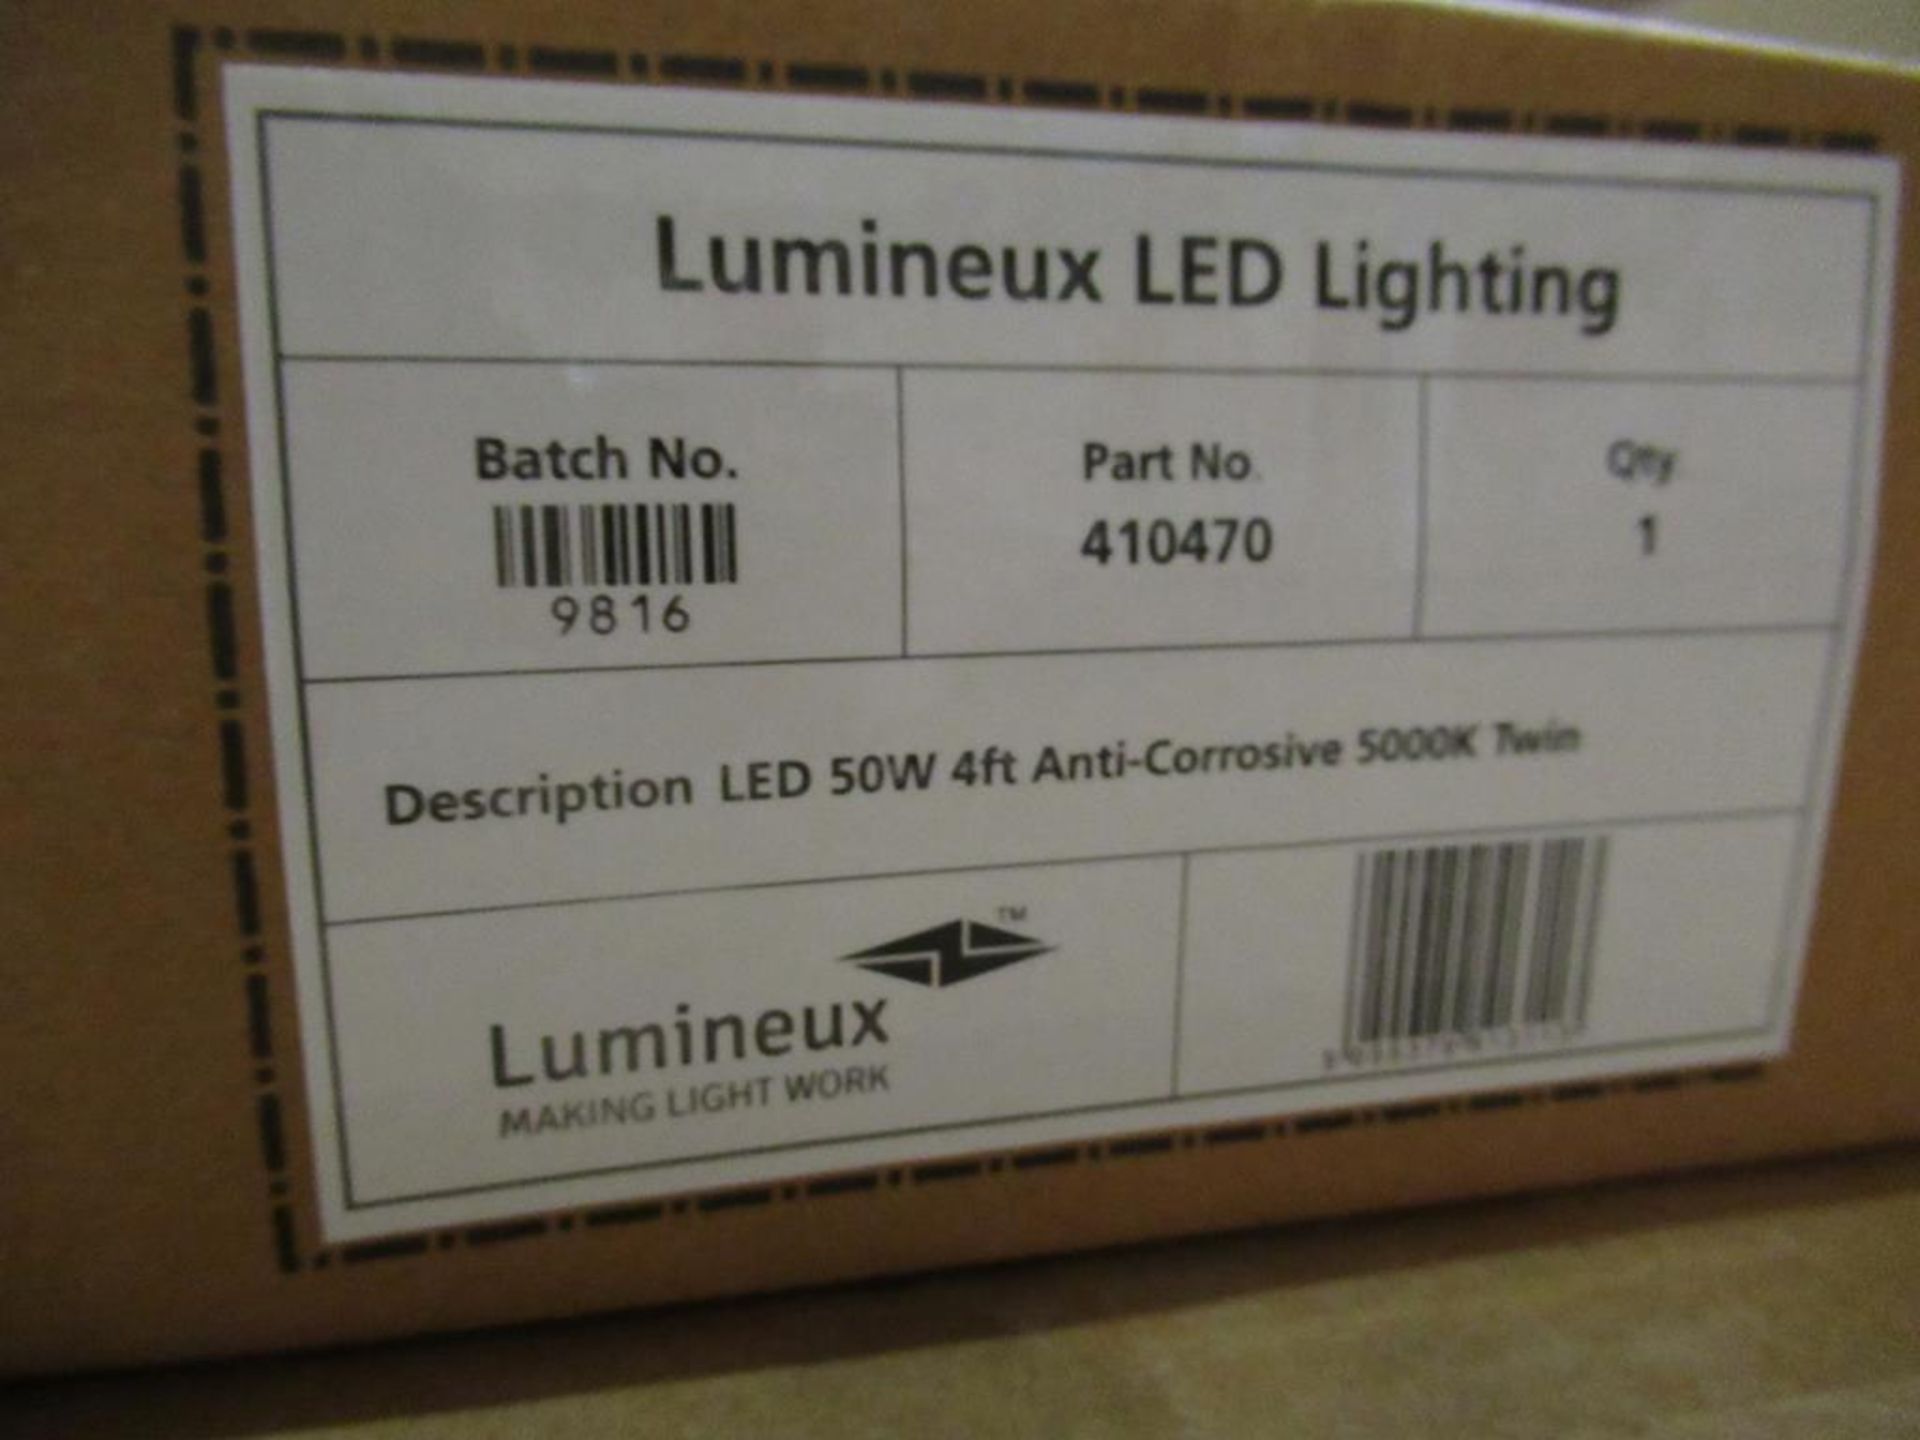 8 x Lumineux LED 50W 4ft Anti-Corrosive 5000K Twin OEM Trade Price £496 - Image 2 of 6